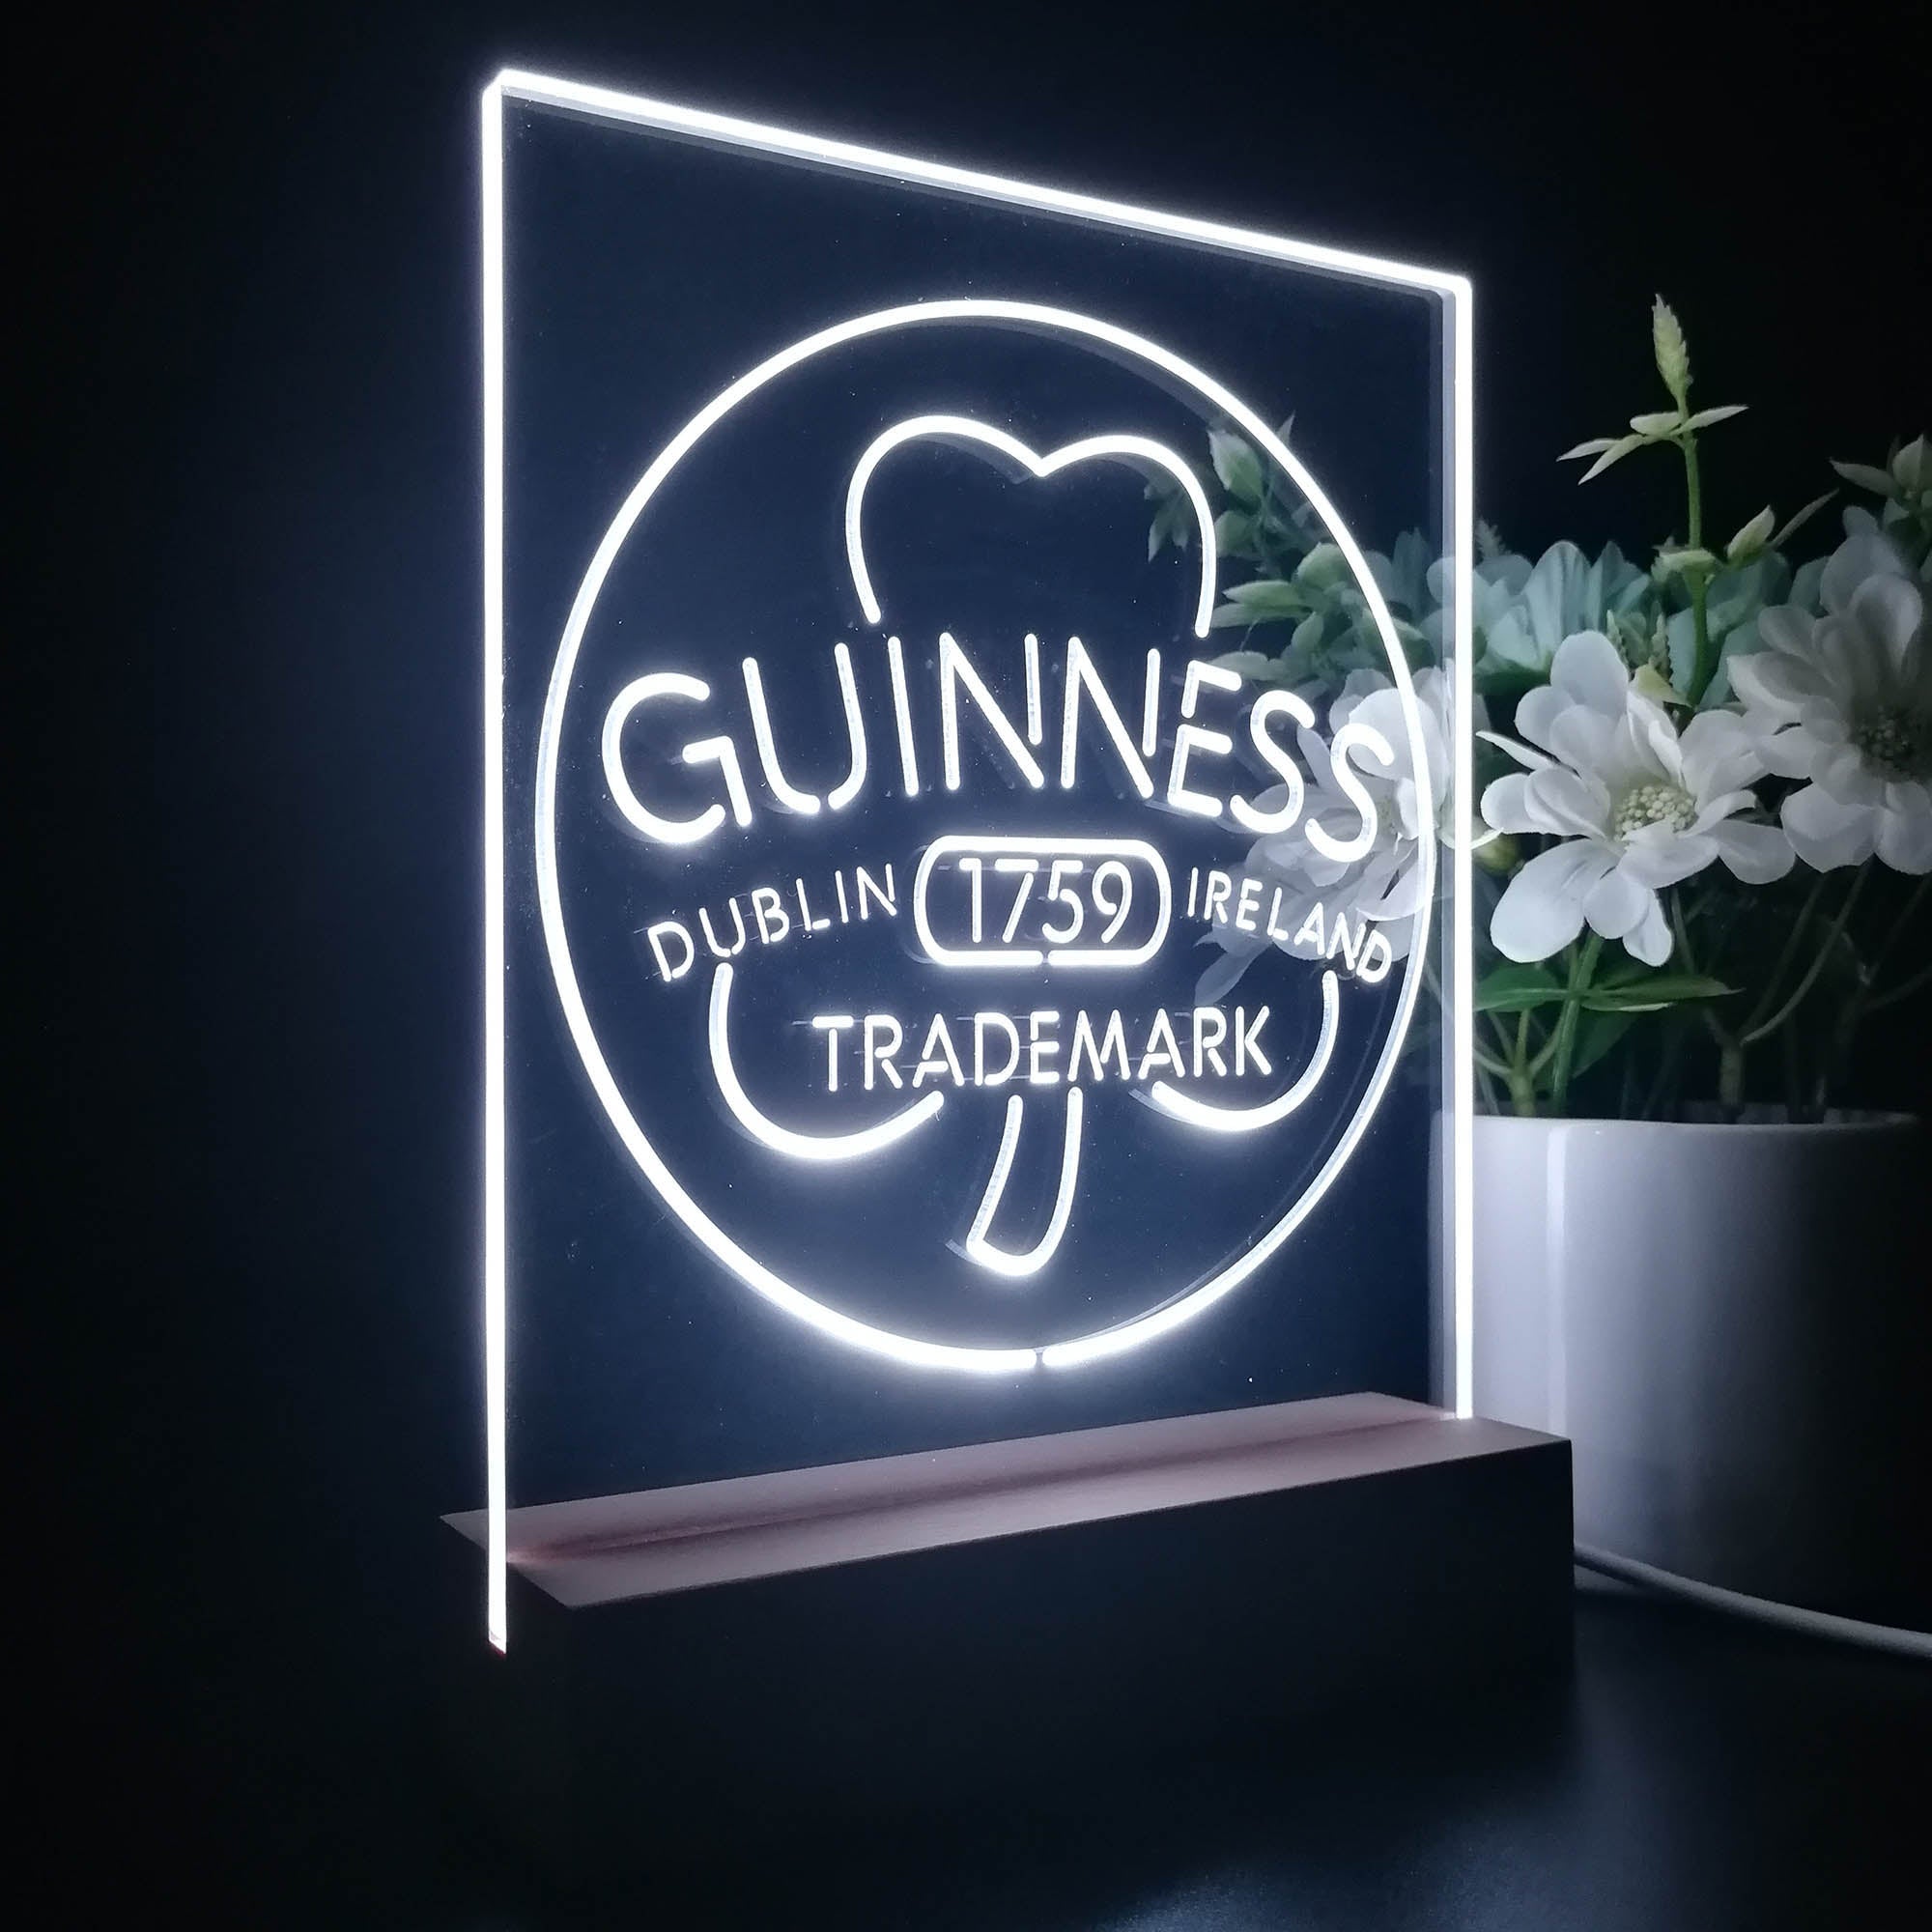 Guinness Shamrock Dublin Ireland 1759 3D Illusion Night Light Desk Lamp